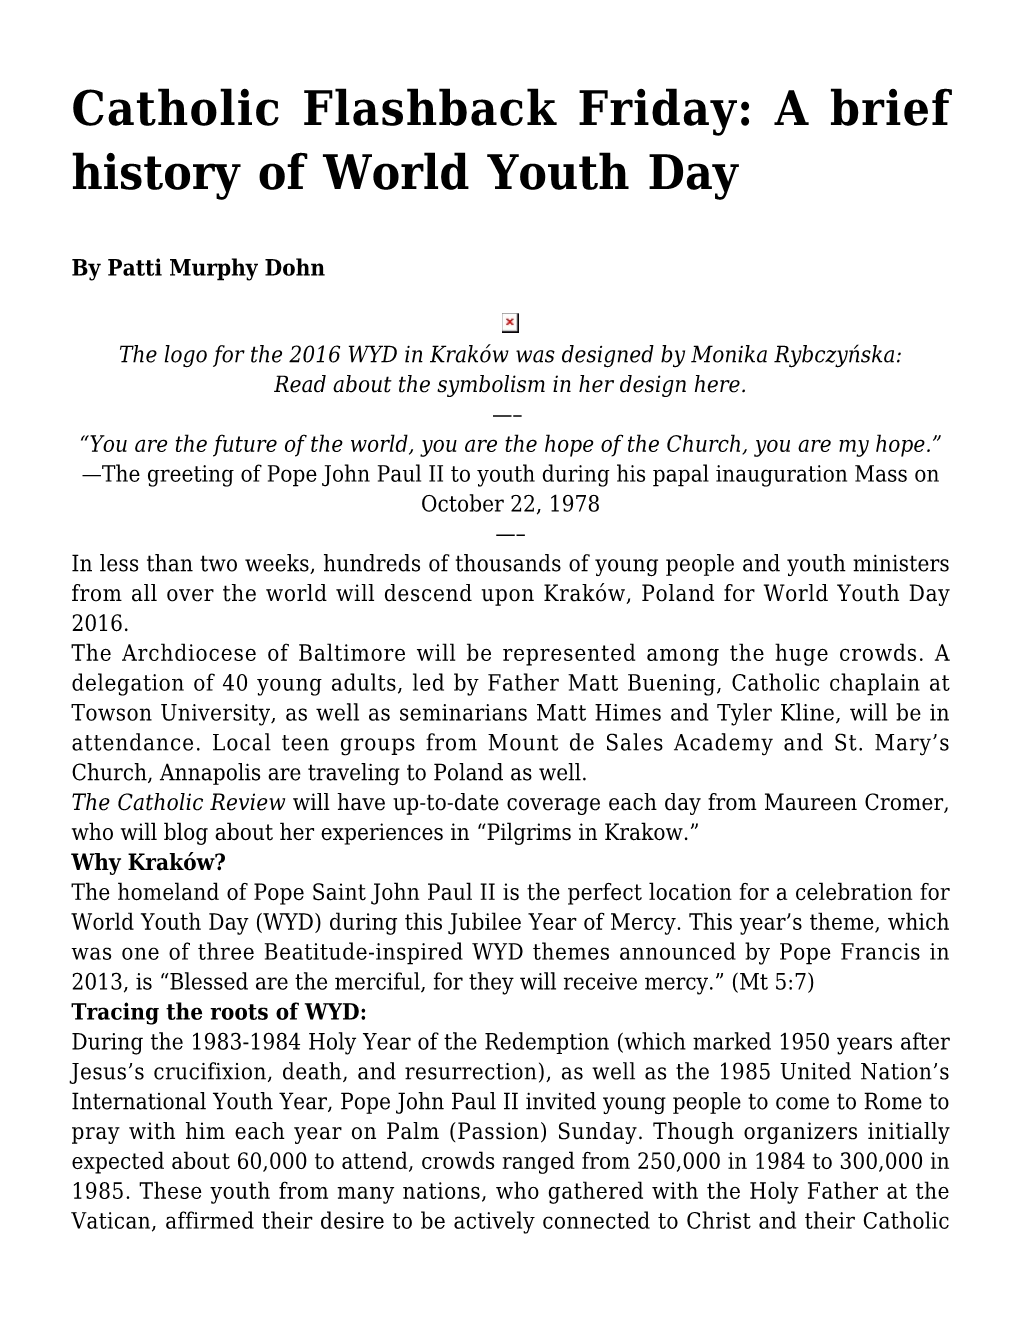 Catholic Flashback Friday: a Brief History of World Youth Day